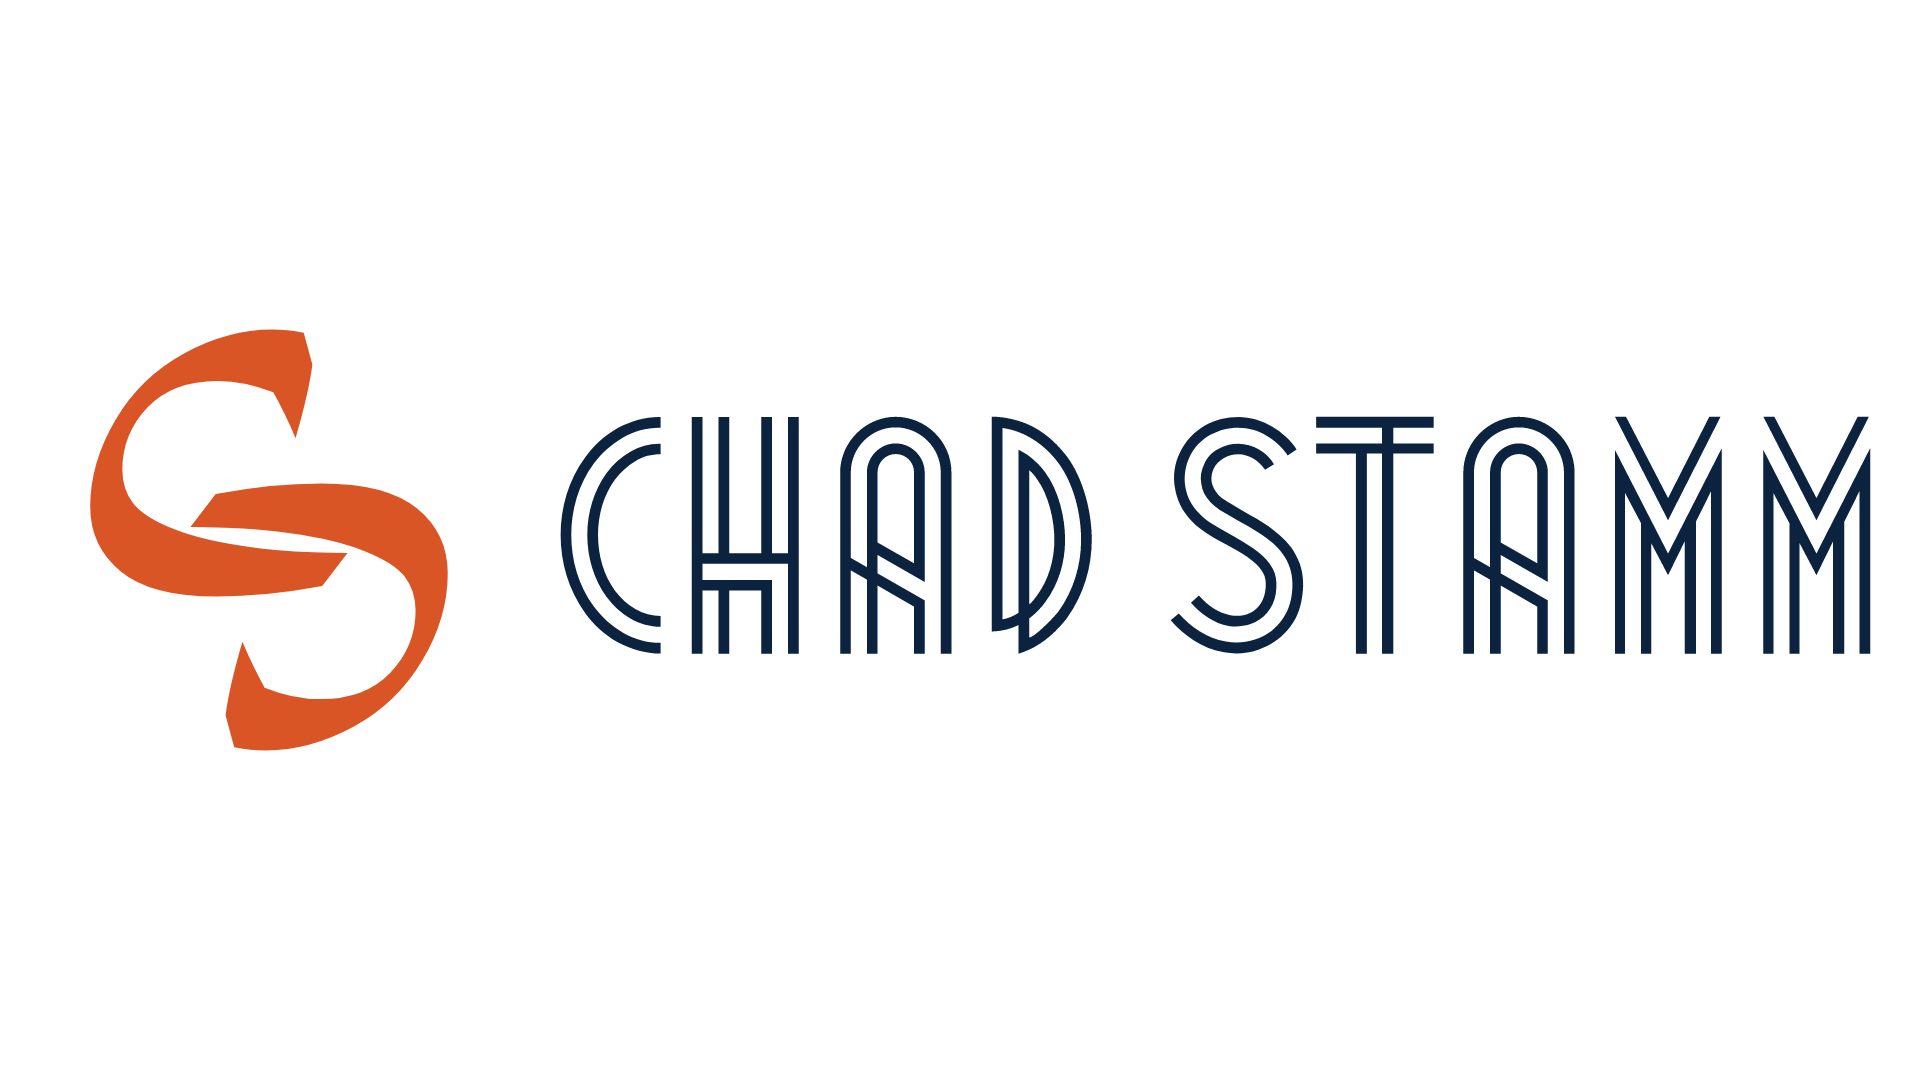 Chad Stamm Author